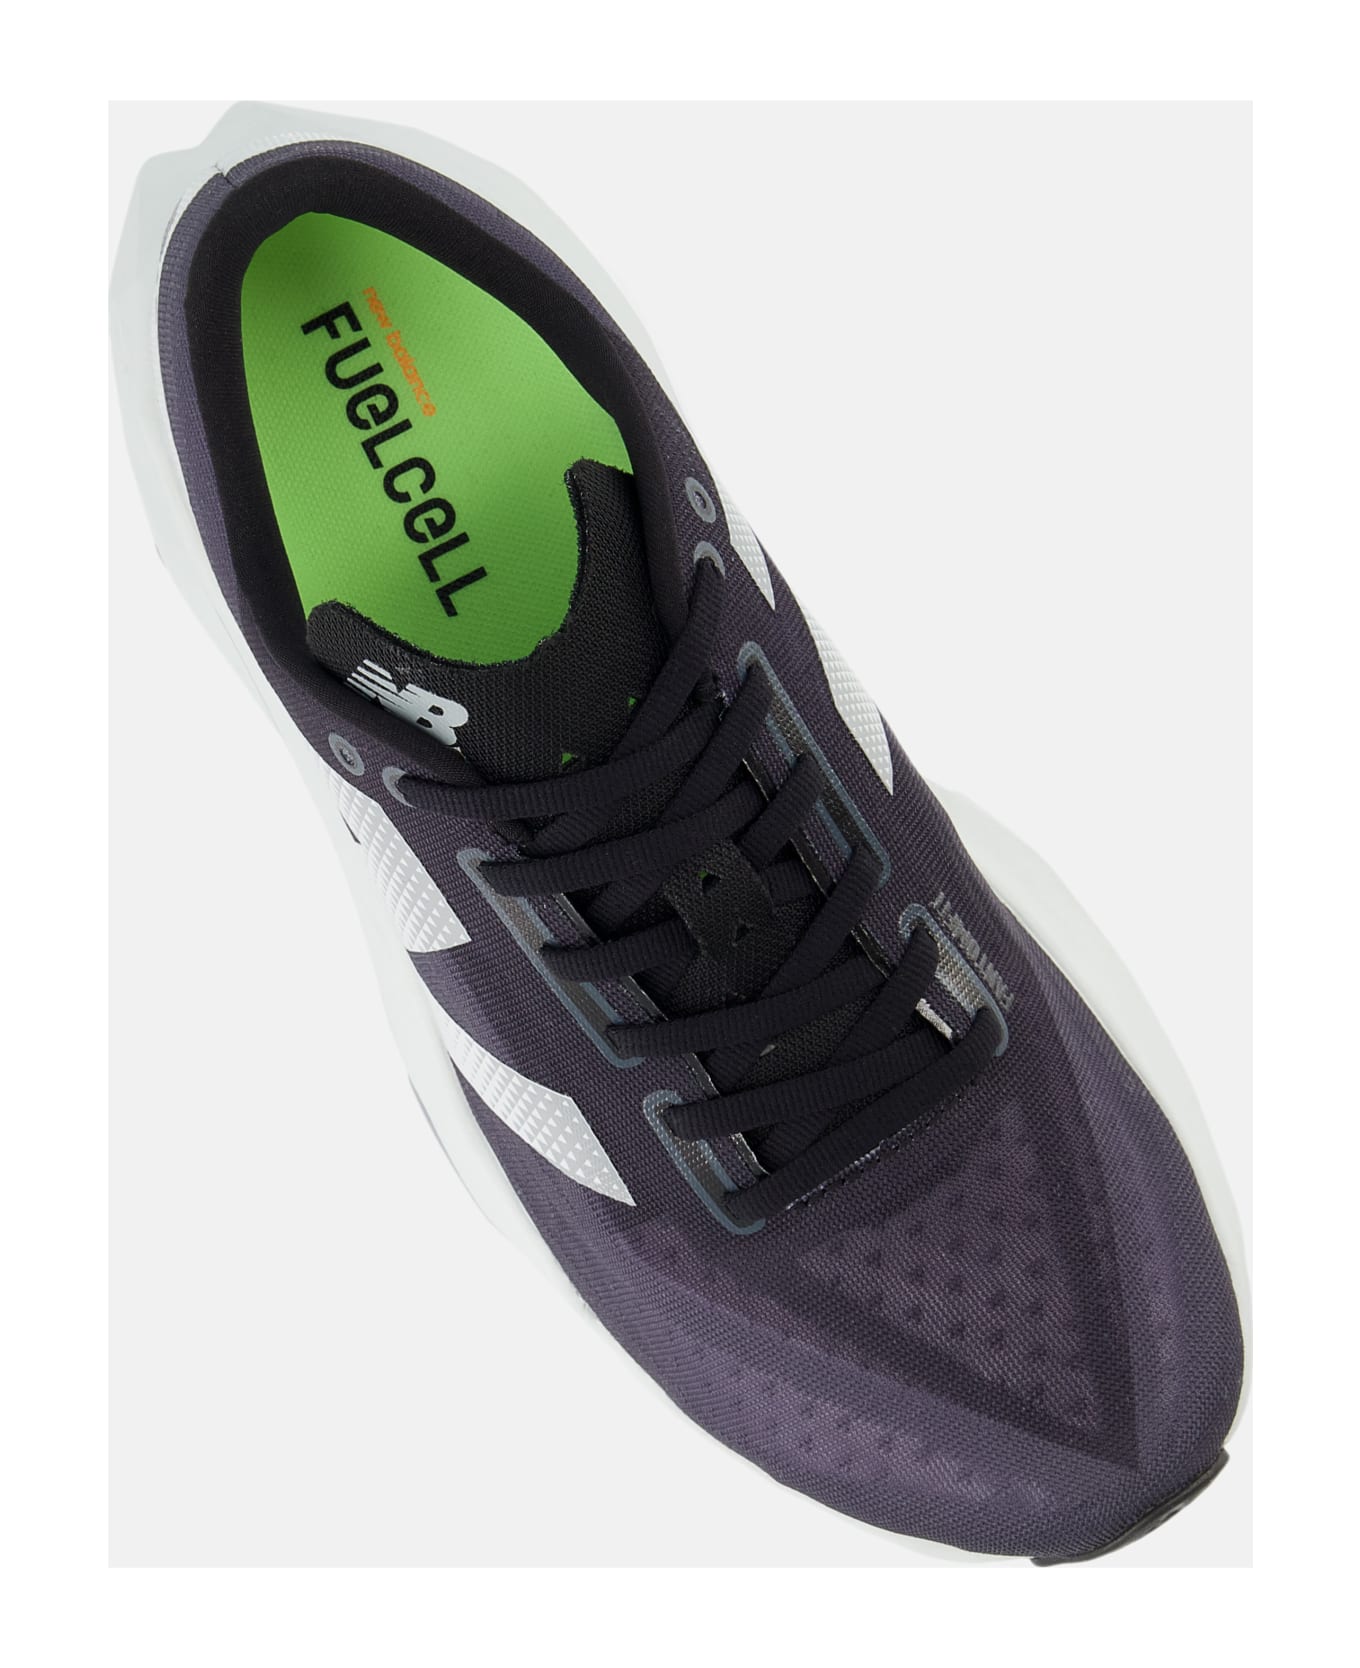 New Balance Rebel V4 Sneakers - Grey スニーカー